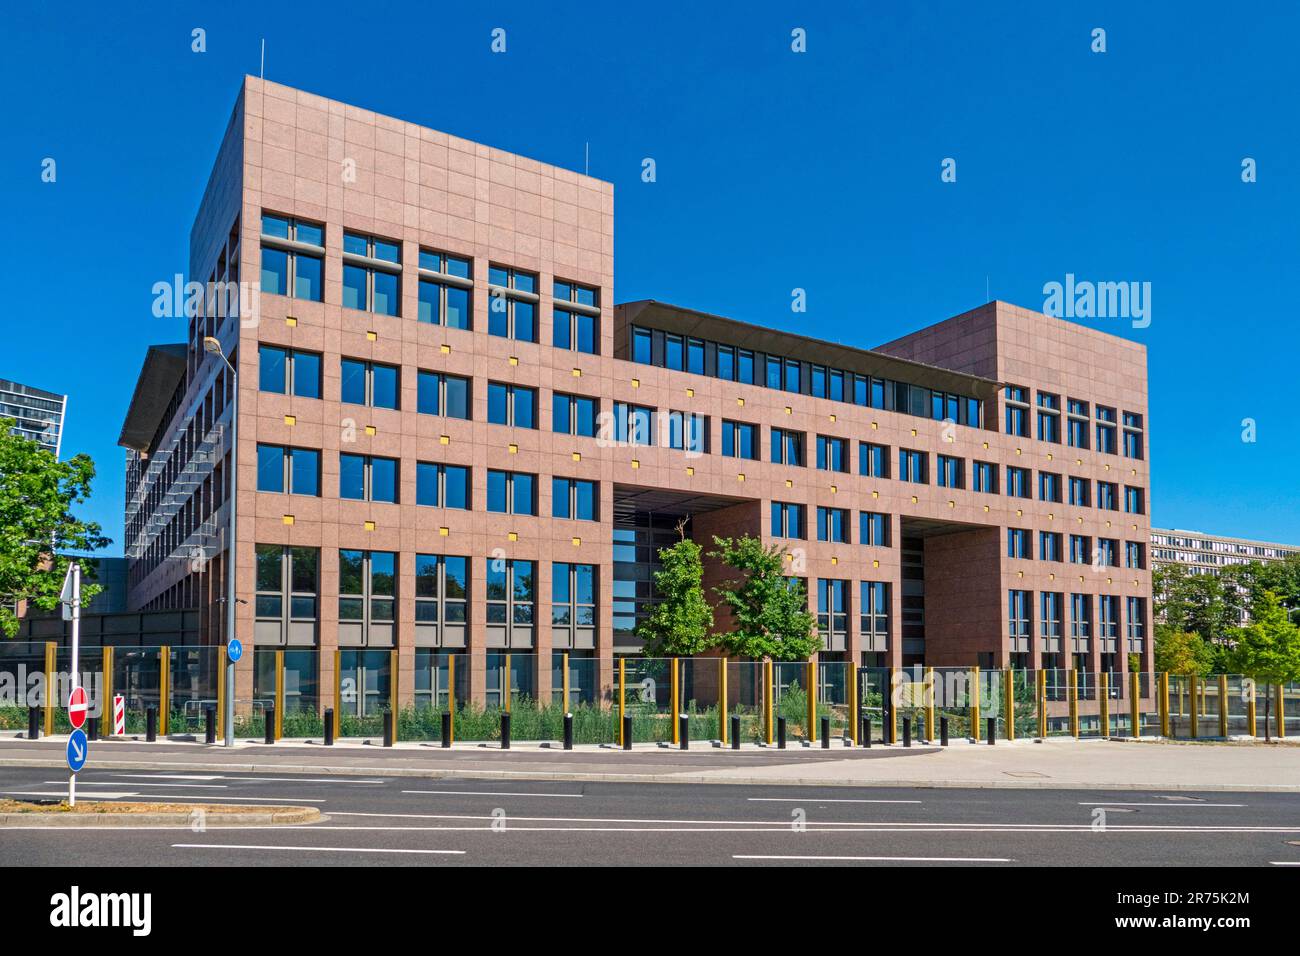 Cour de justice européenne, Kirchberg, Luxembourg, Benelux, pays du Benelux, Luxembourg Banque D'Images